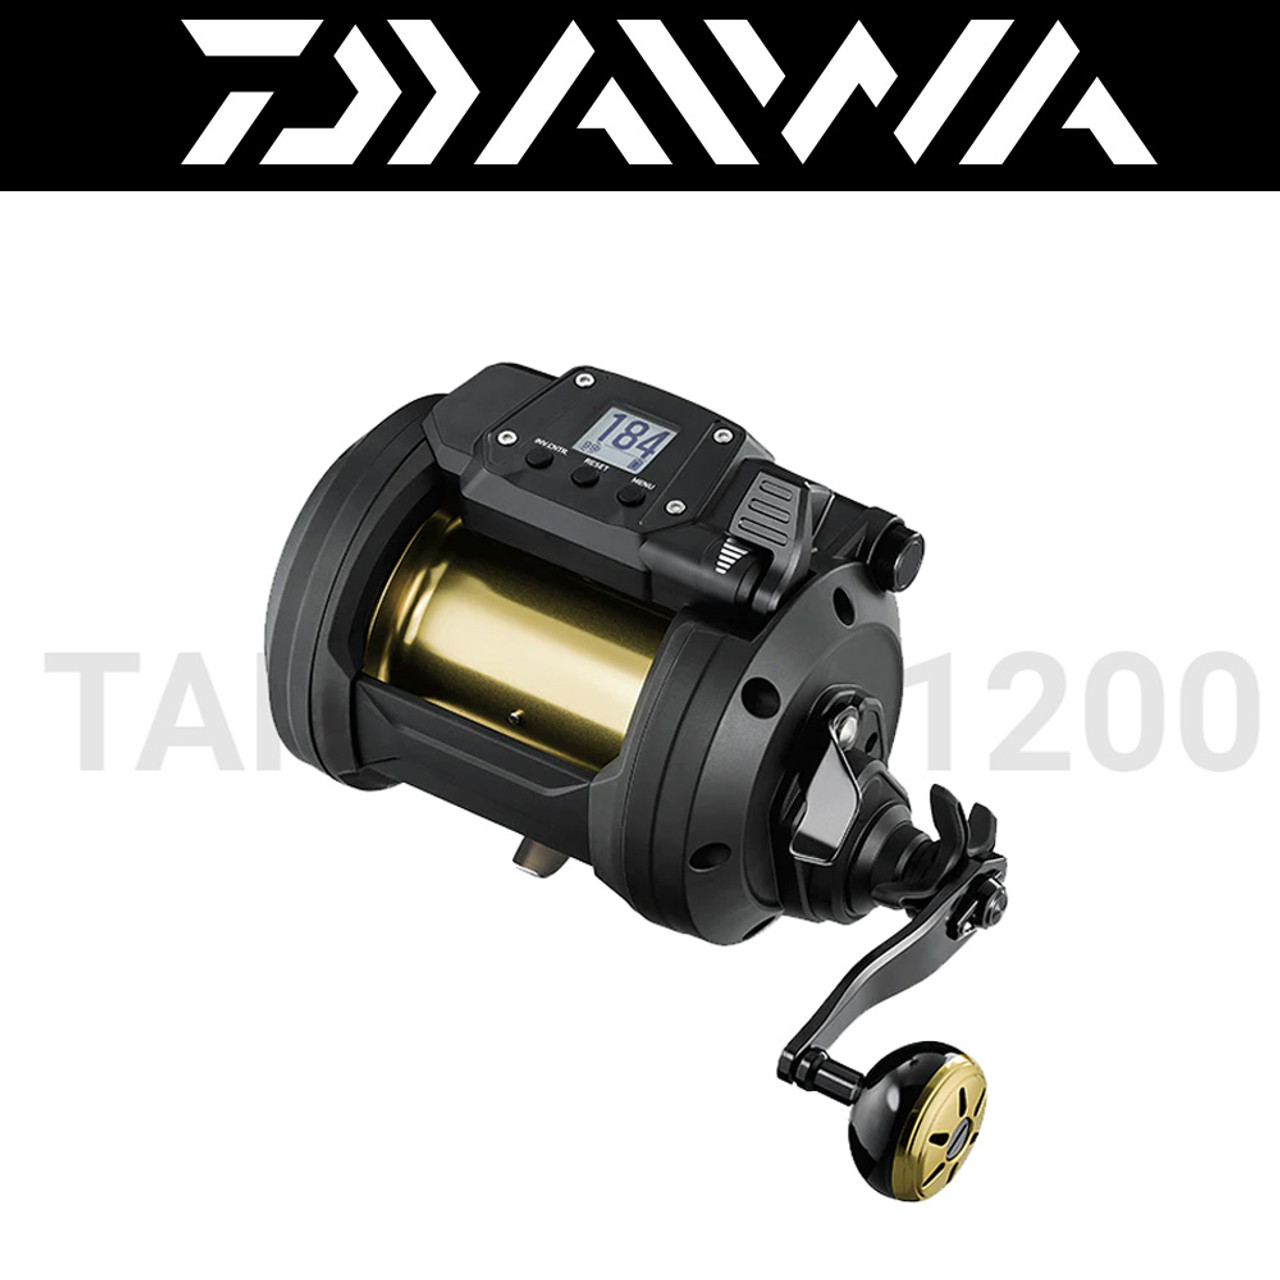 Daiwa Tanacom 800/1200 Electric Reels